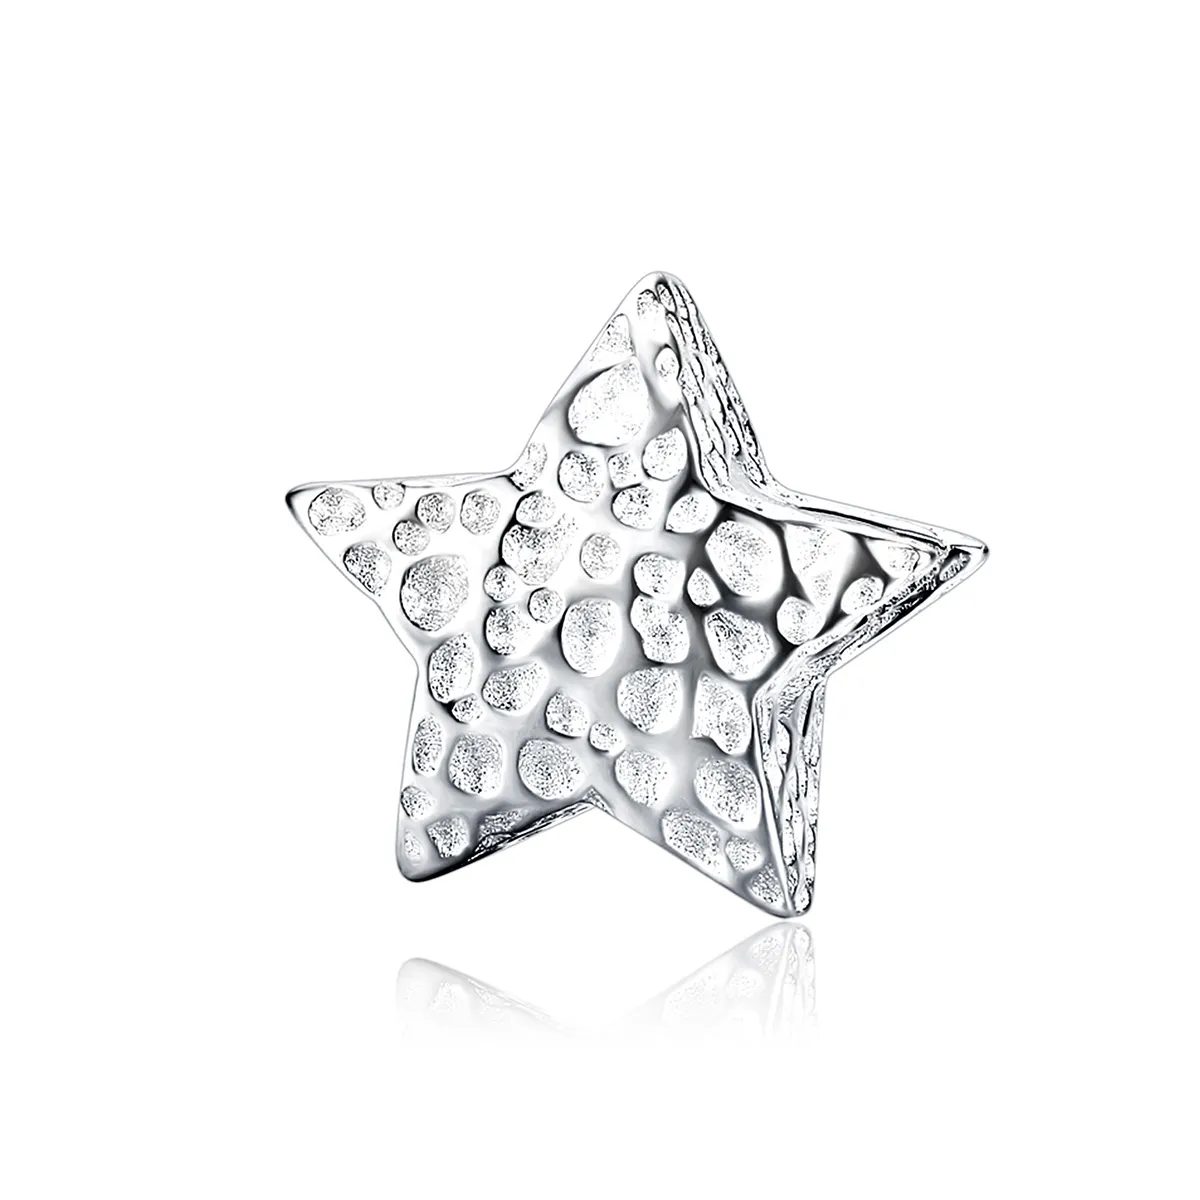 Pandora Style Silver Starry Charm - SCC1246